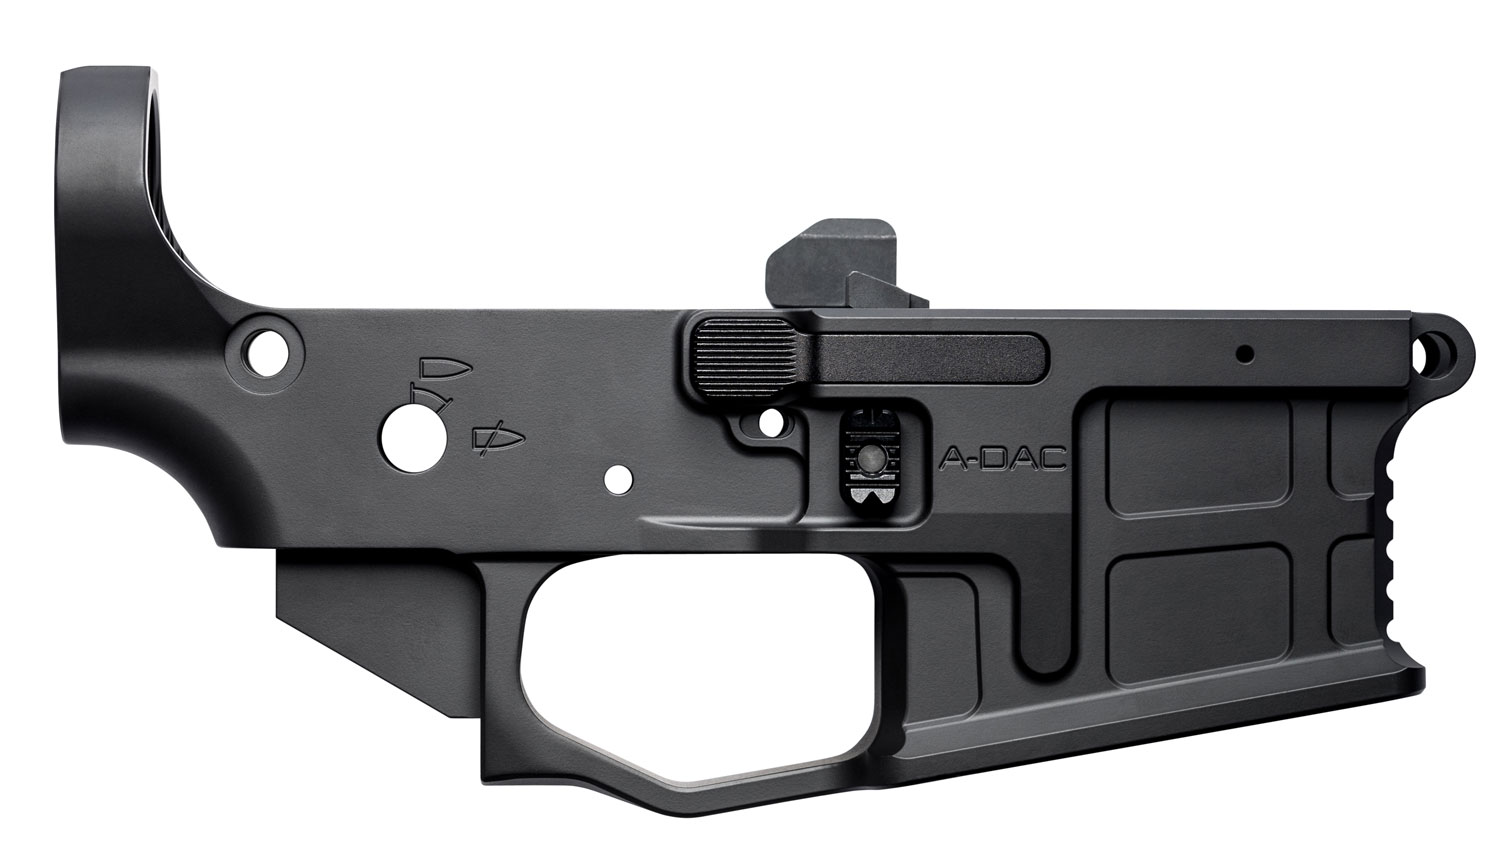 Radian Weapons R0166 AX556 Lower Receiver AR-15 Style, Multi-Caliber, 7075-T6 Aluminum w/Cerakote Finish, Talon 45/90 Ambidextrous Safety